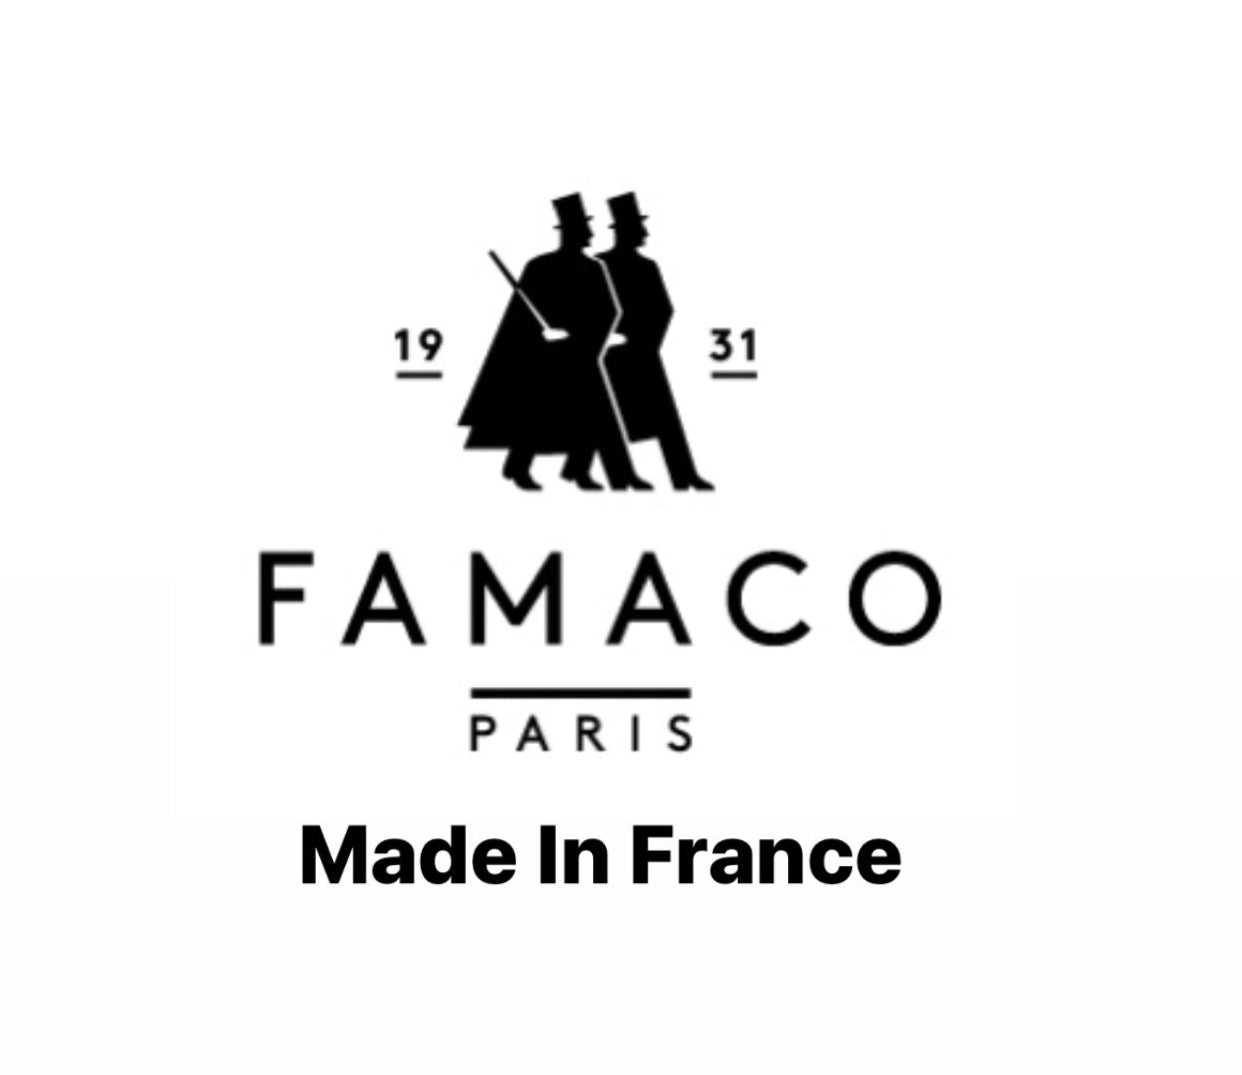 Famaco Green Pistache Cream Polish 50ml Made In France